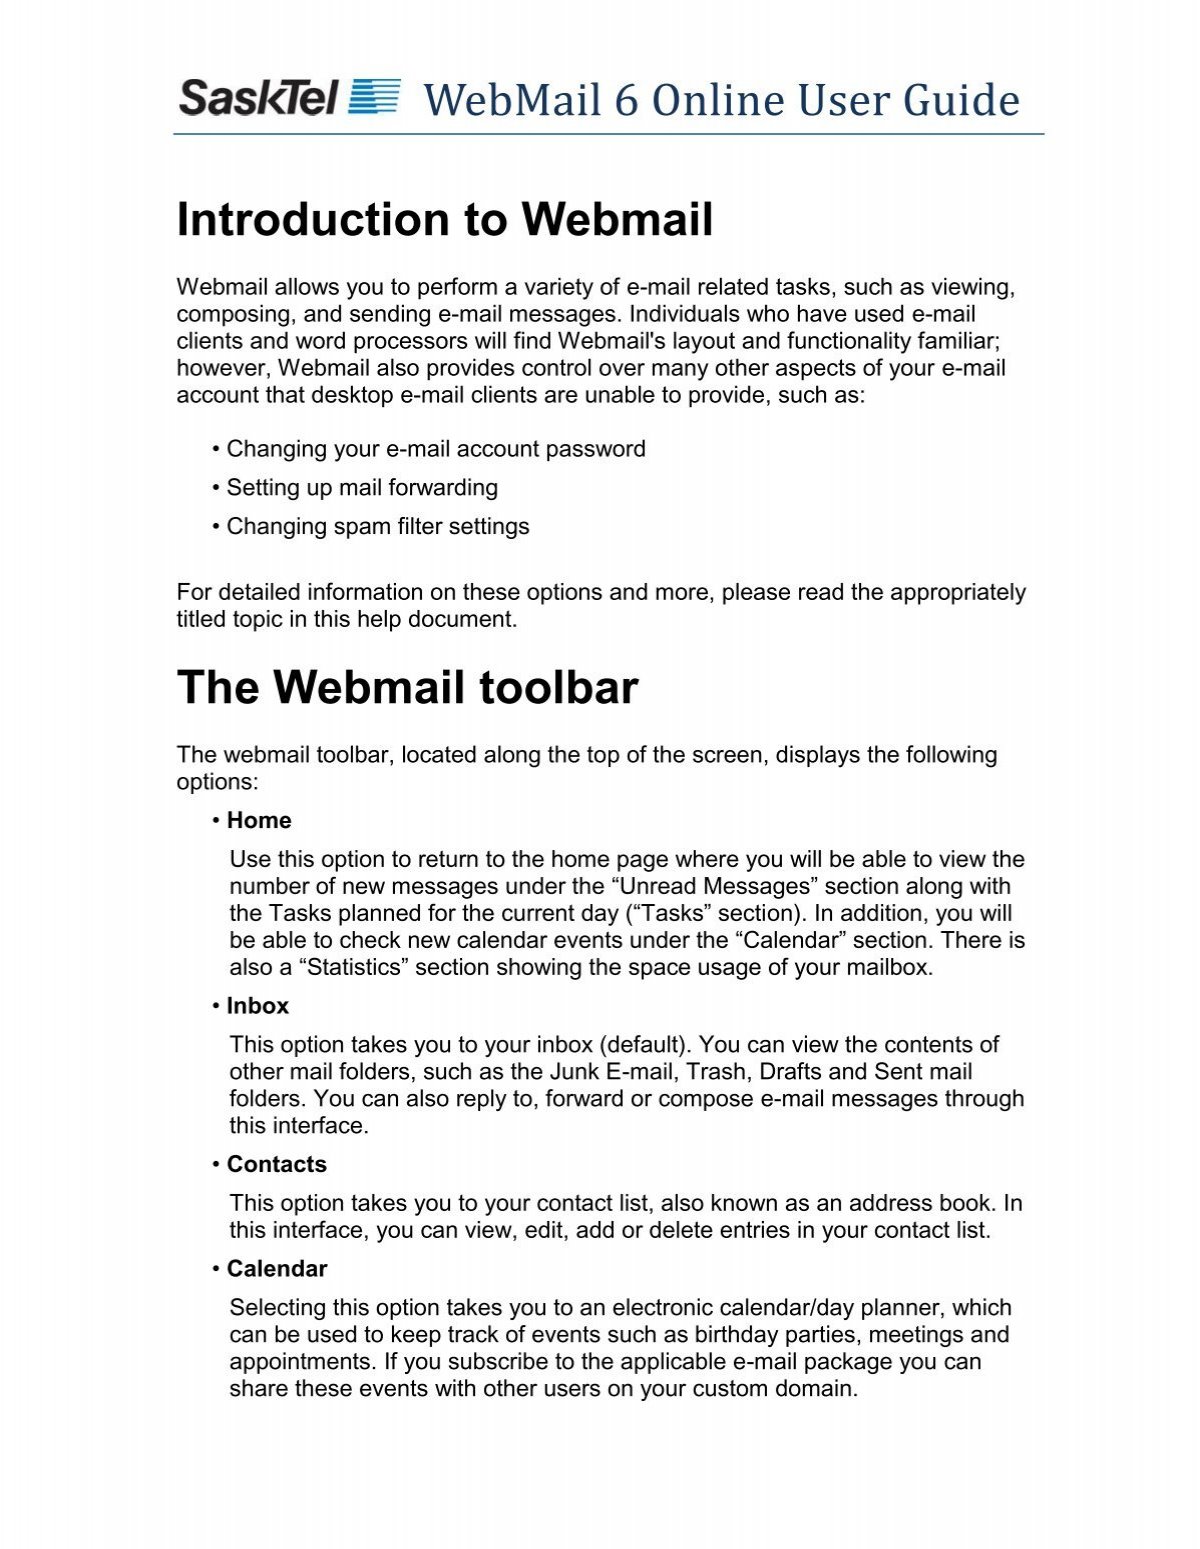 Logging in to sasktel.net Webmail